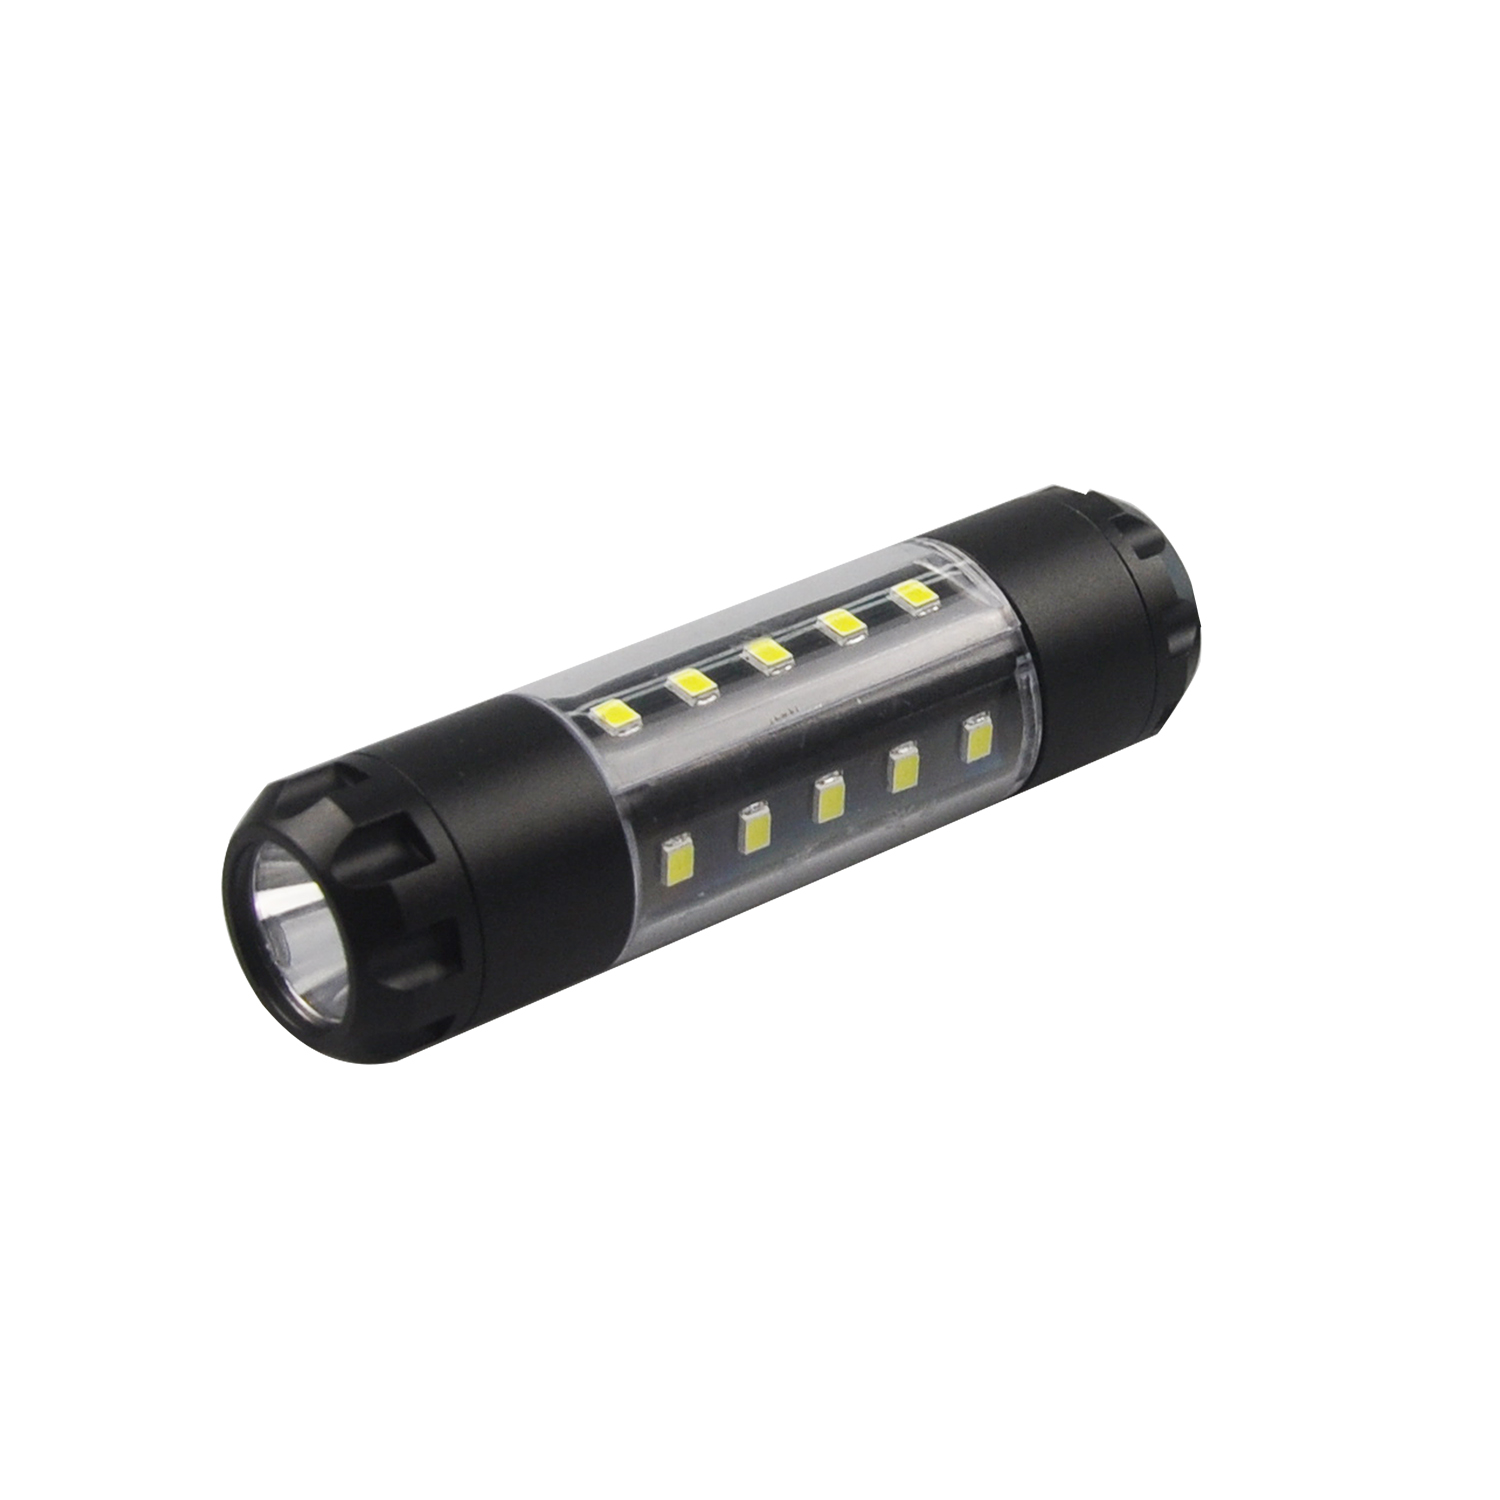 Mini SMD Black Battery Led Emergency Torch Flashlight with String